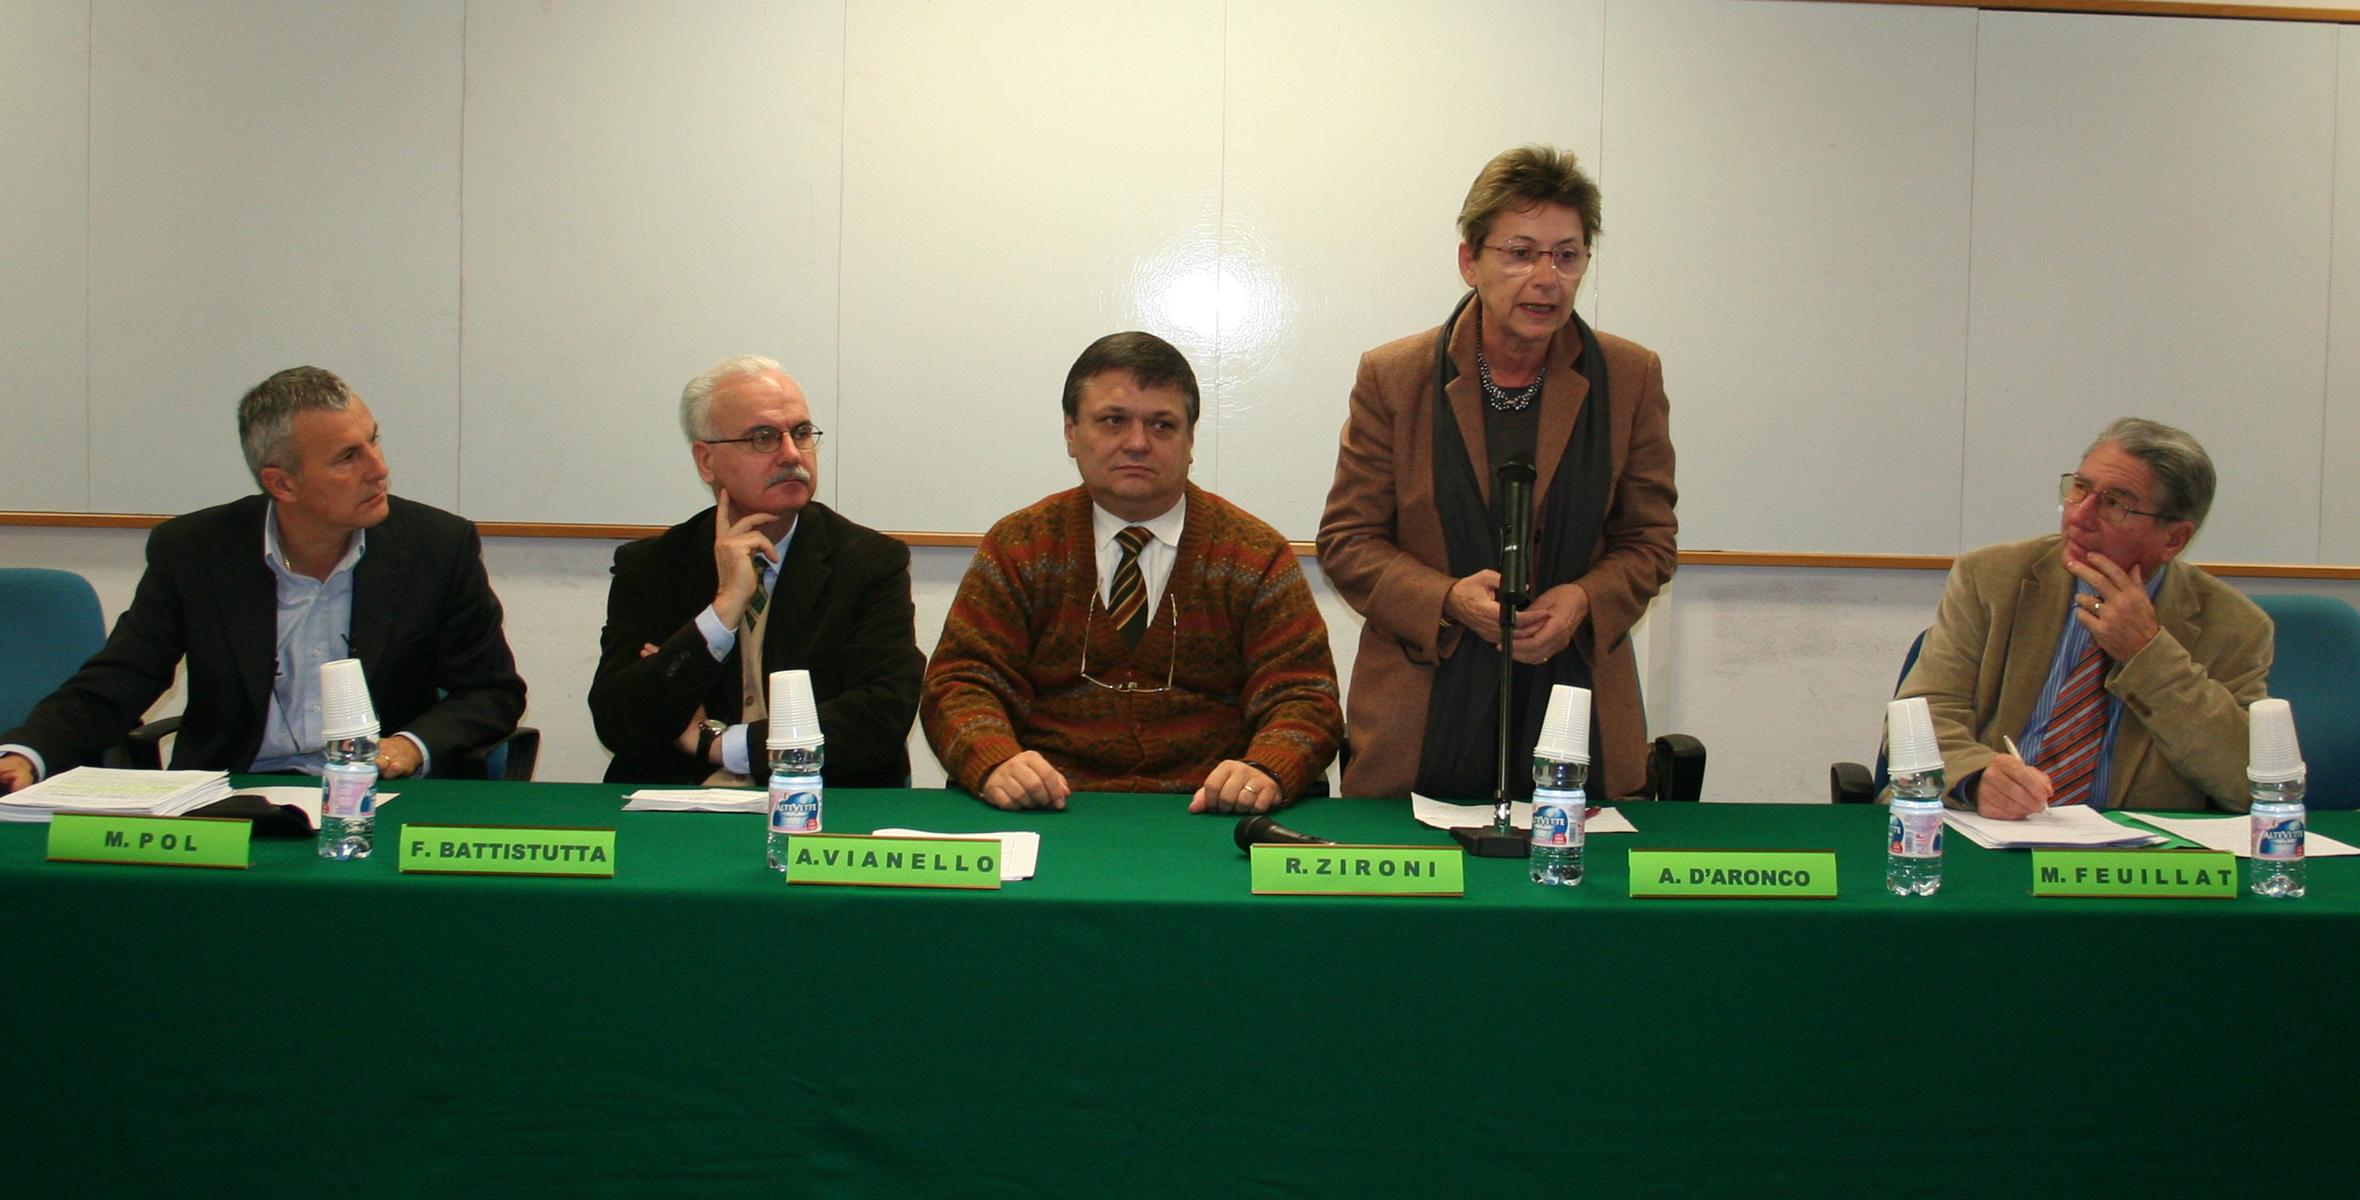 Pol, Vianello, Zironi, D'Aronco Feuillat (da sinistra)